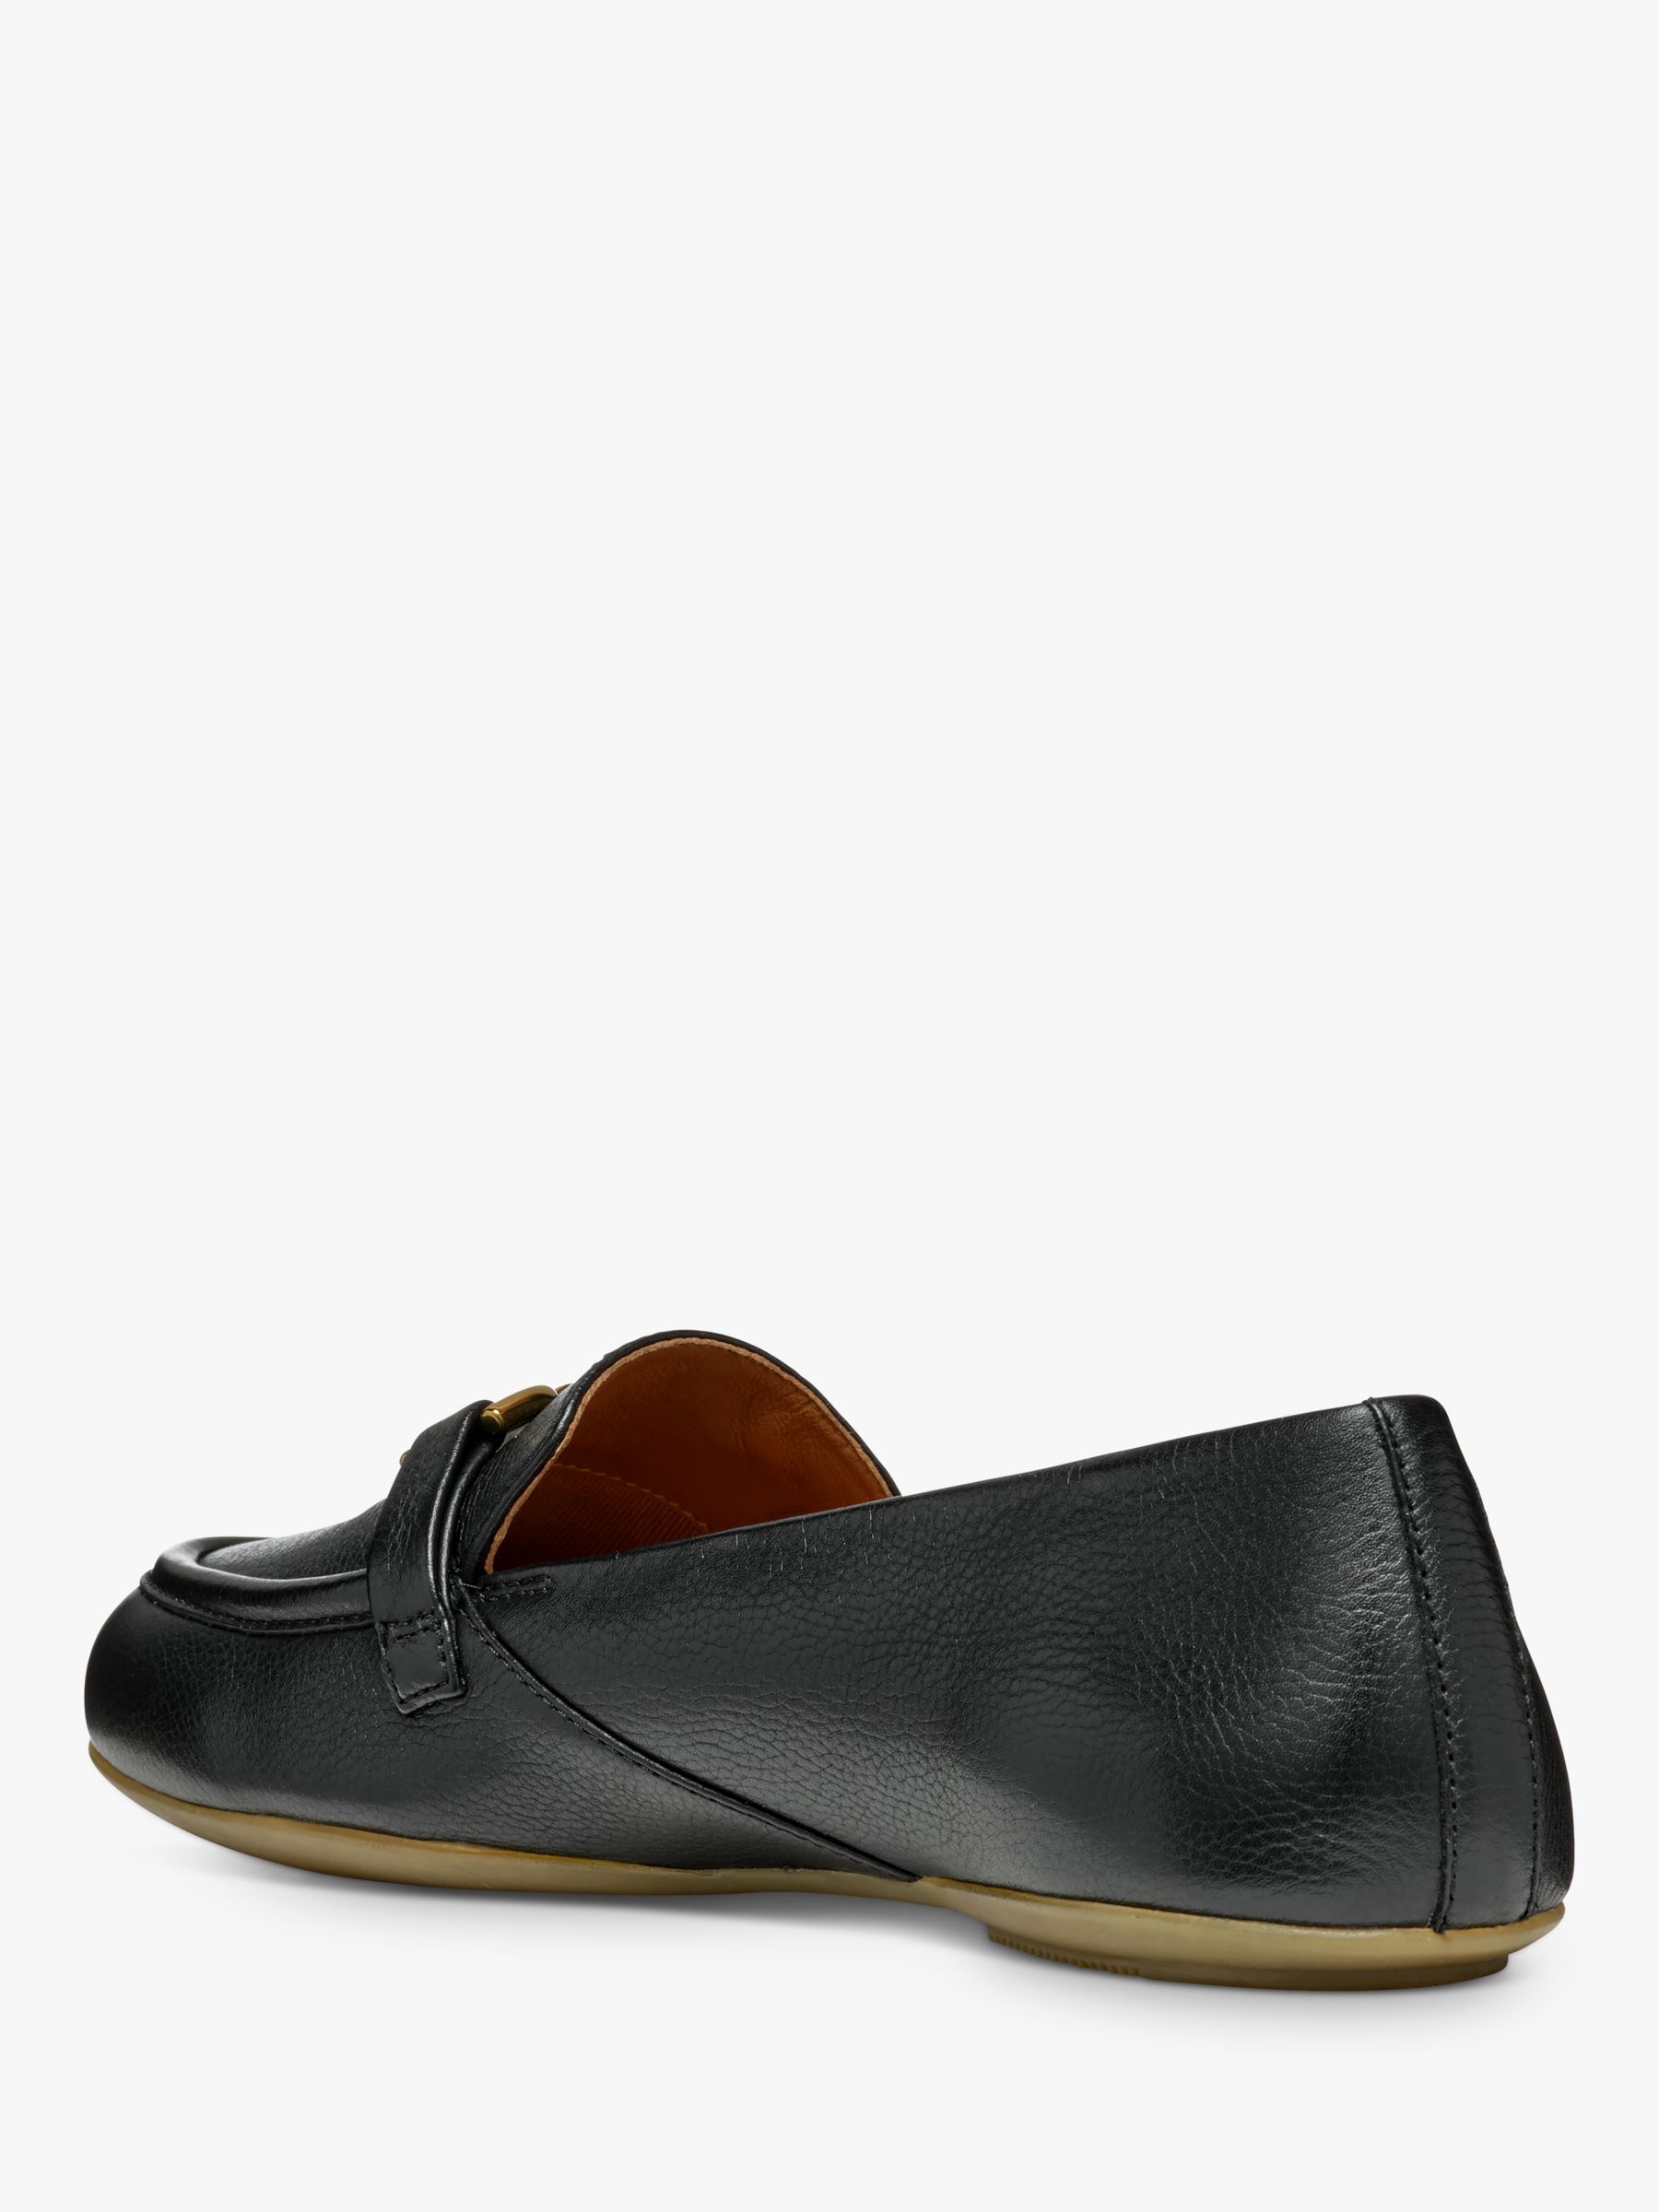 Geox Palmaria Leather City Loafers, Black, EU37.5